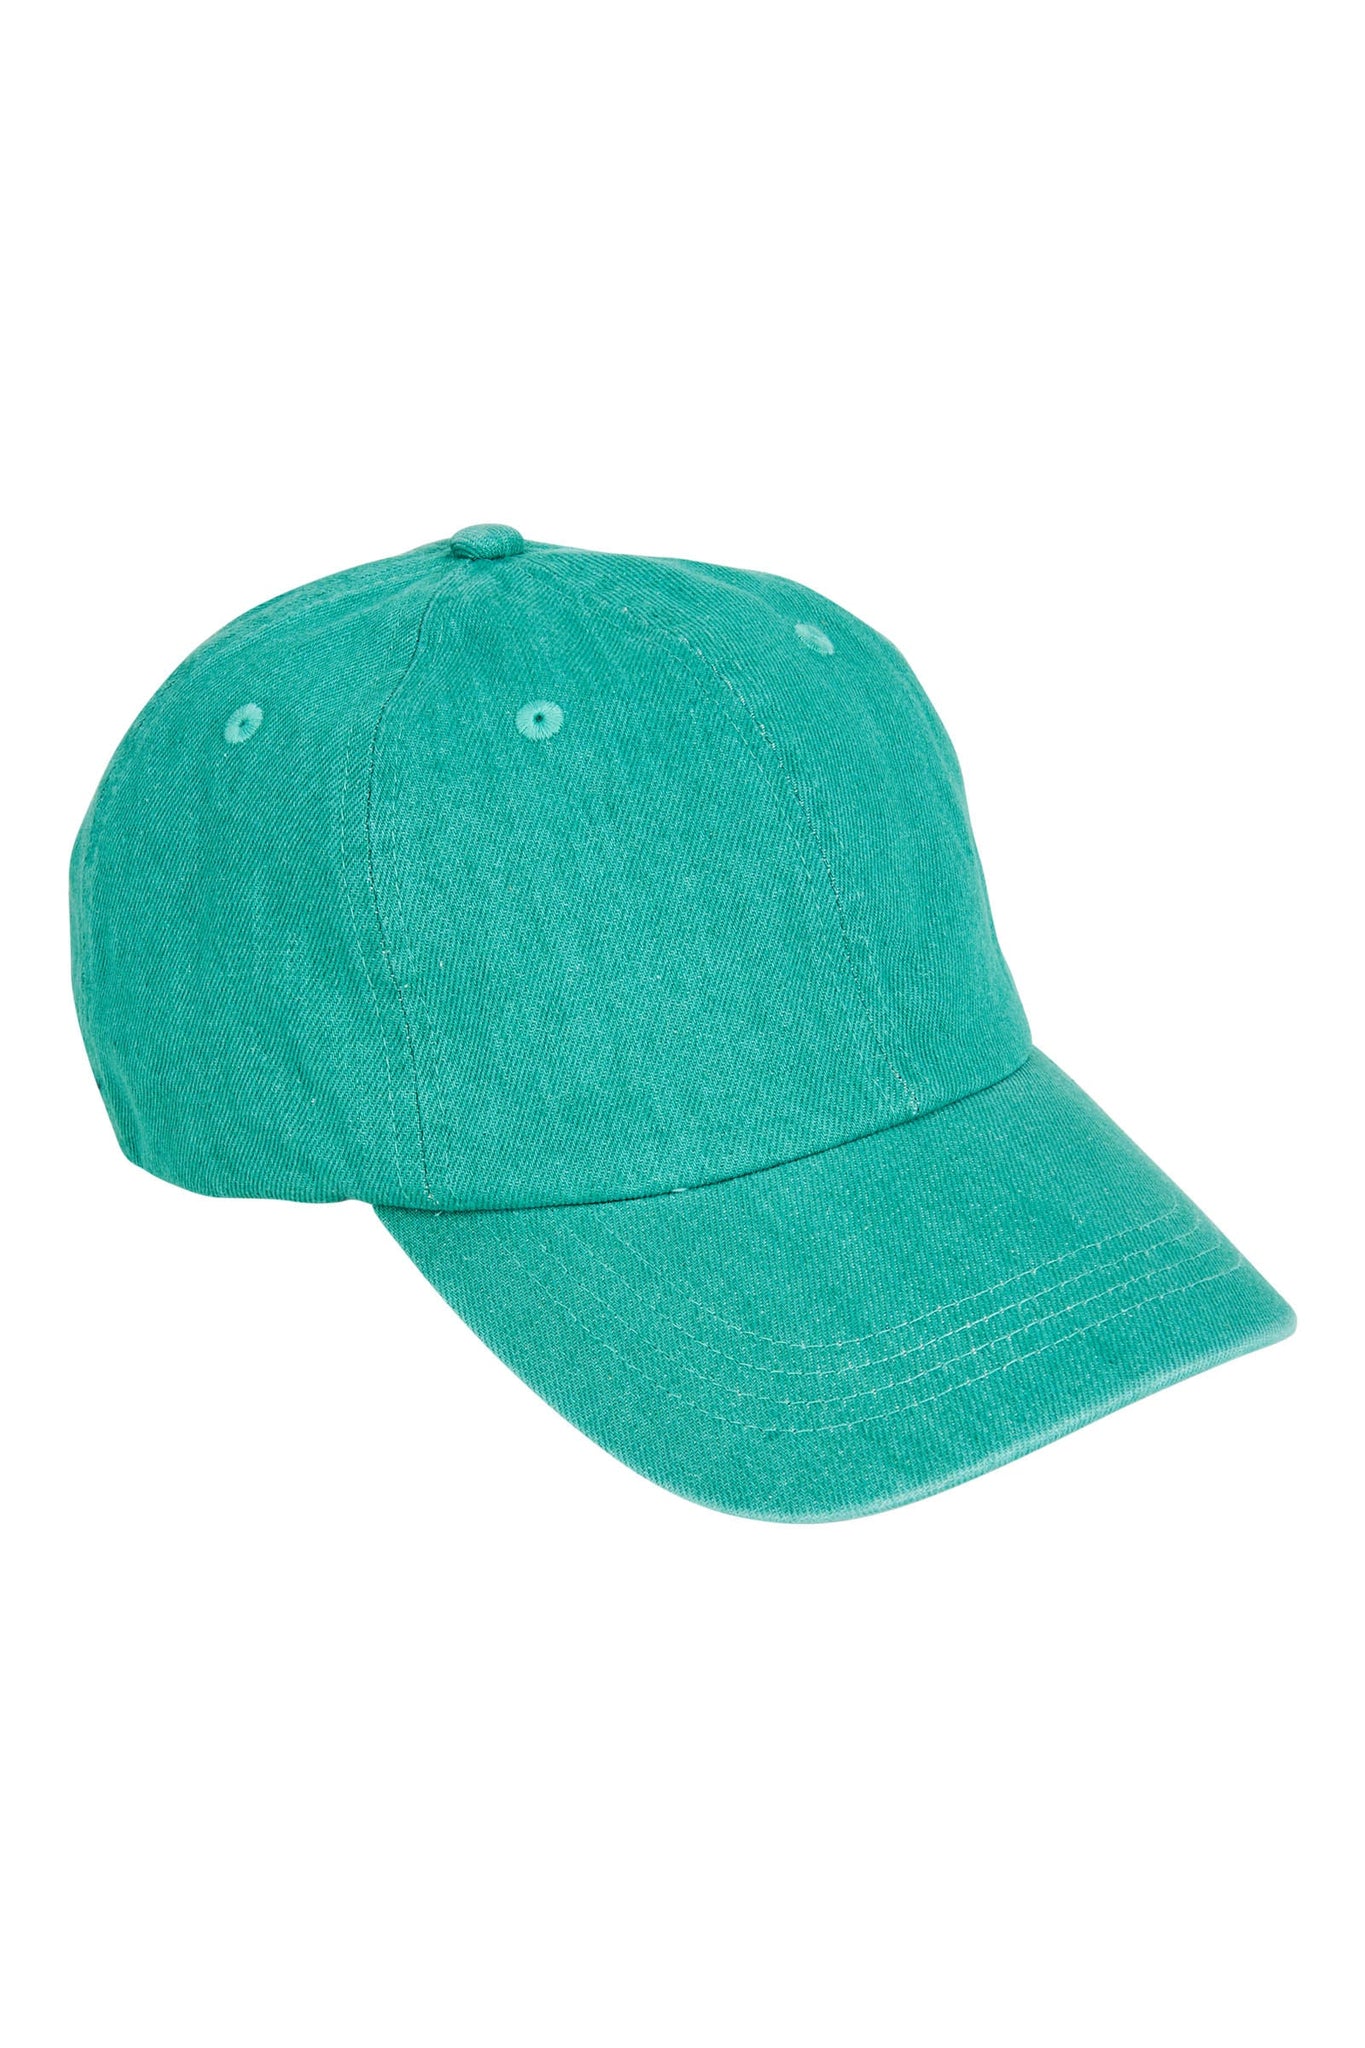 Cayman Peak Hat - Seagreen